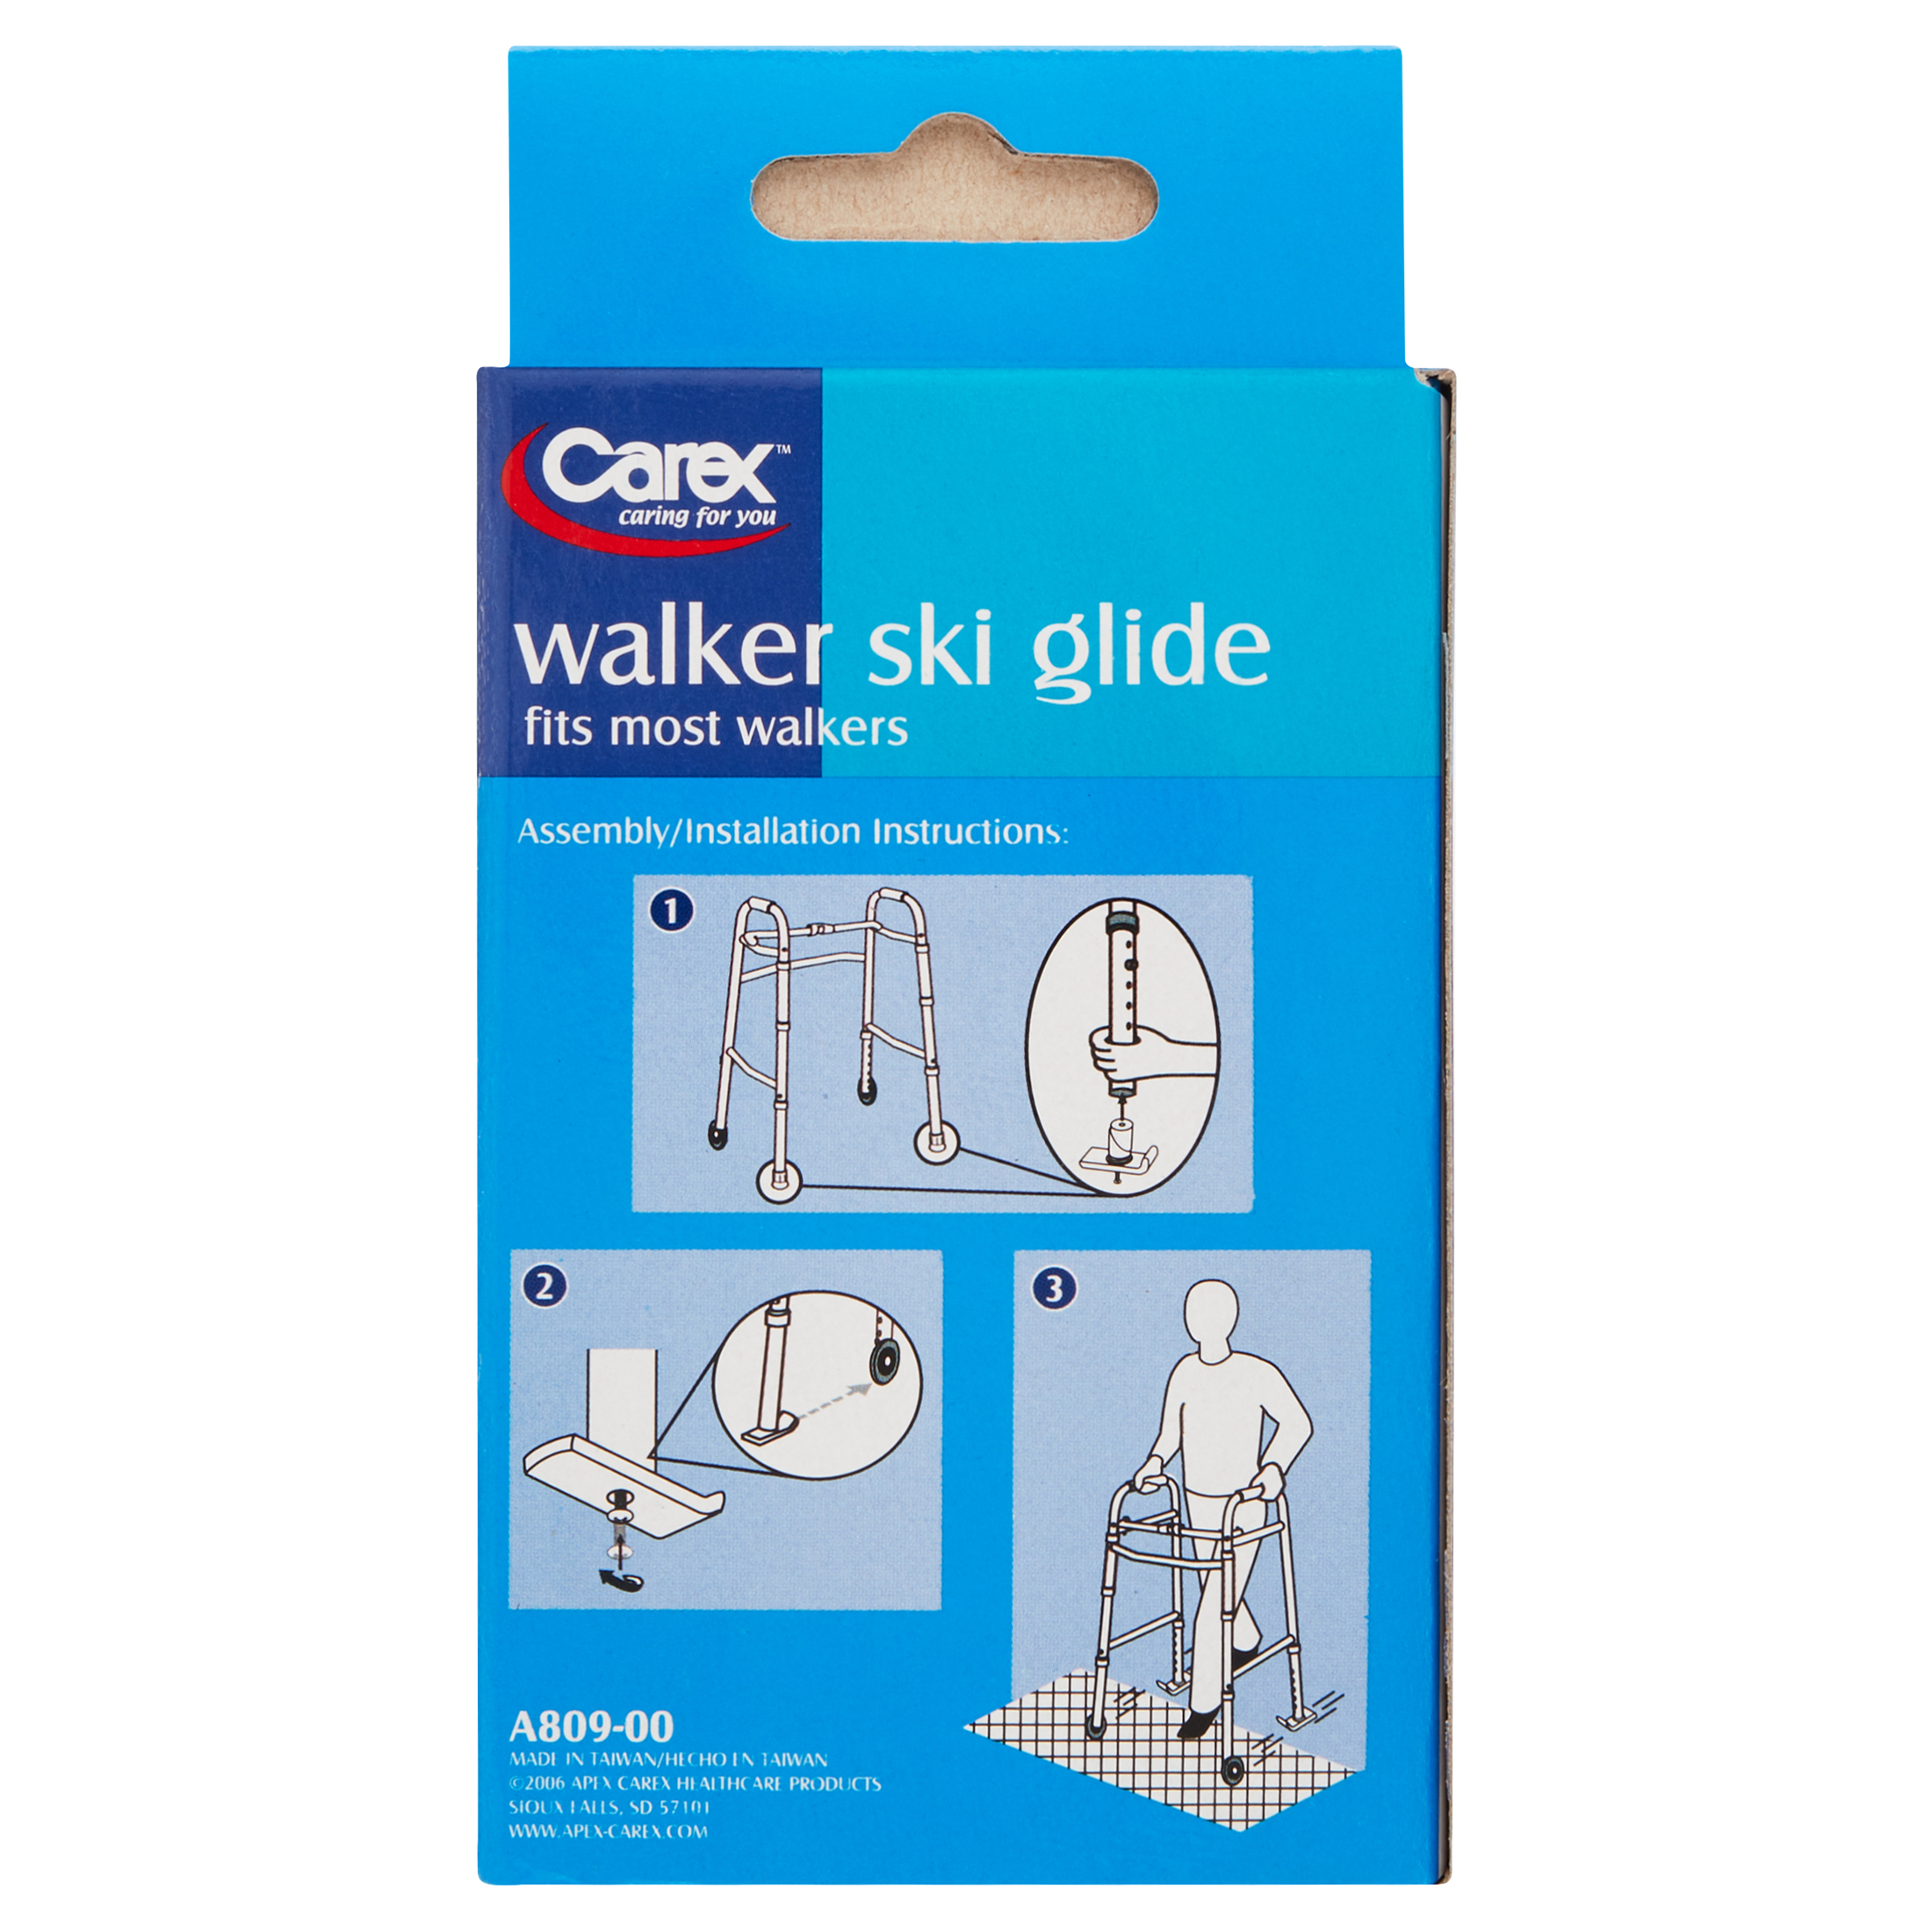 Carex Plastic Walker Ski Glides, Fits Most Walkers, Use Indoor or Outdoor, White - image 5 of 6